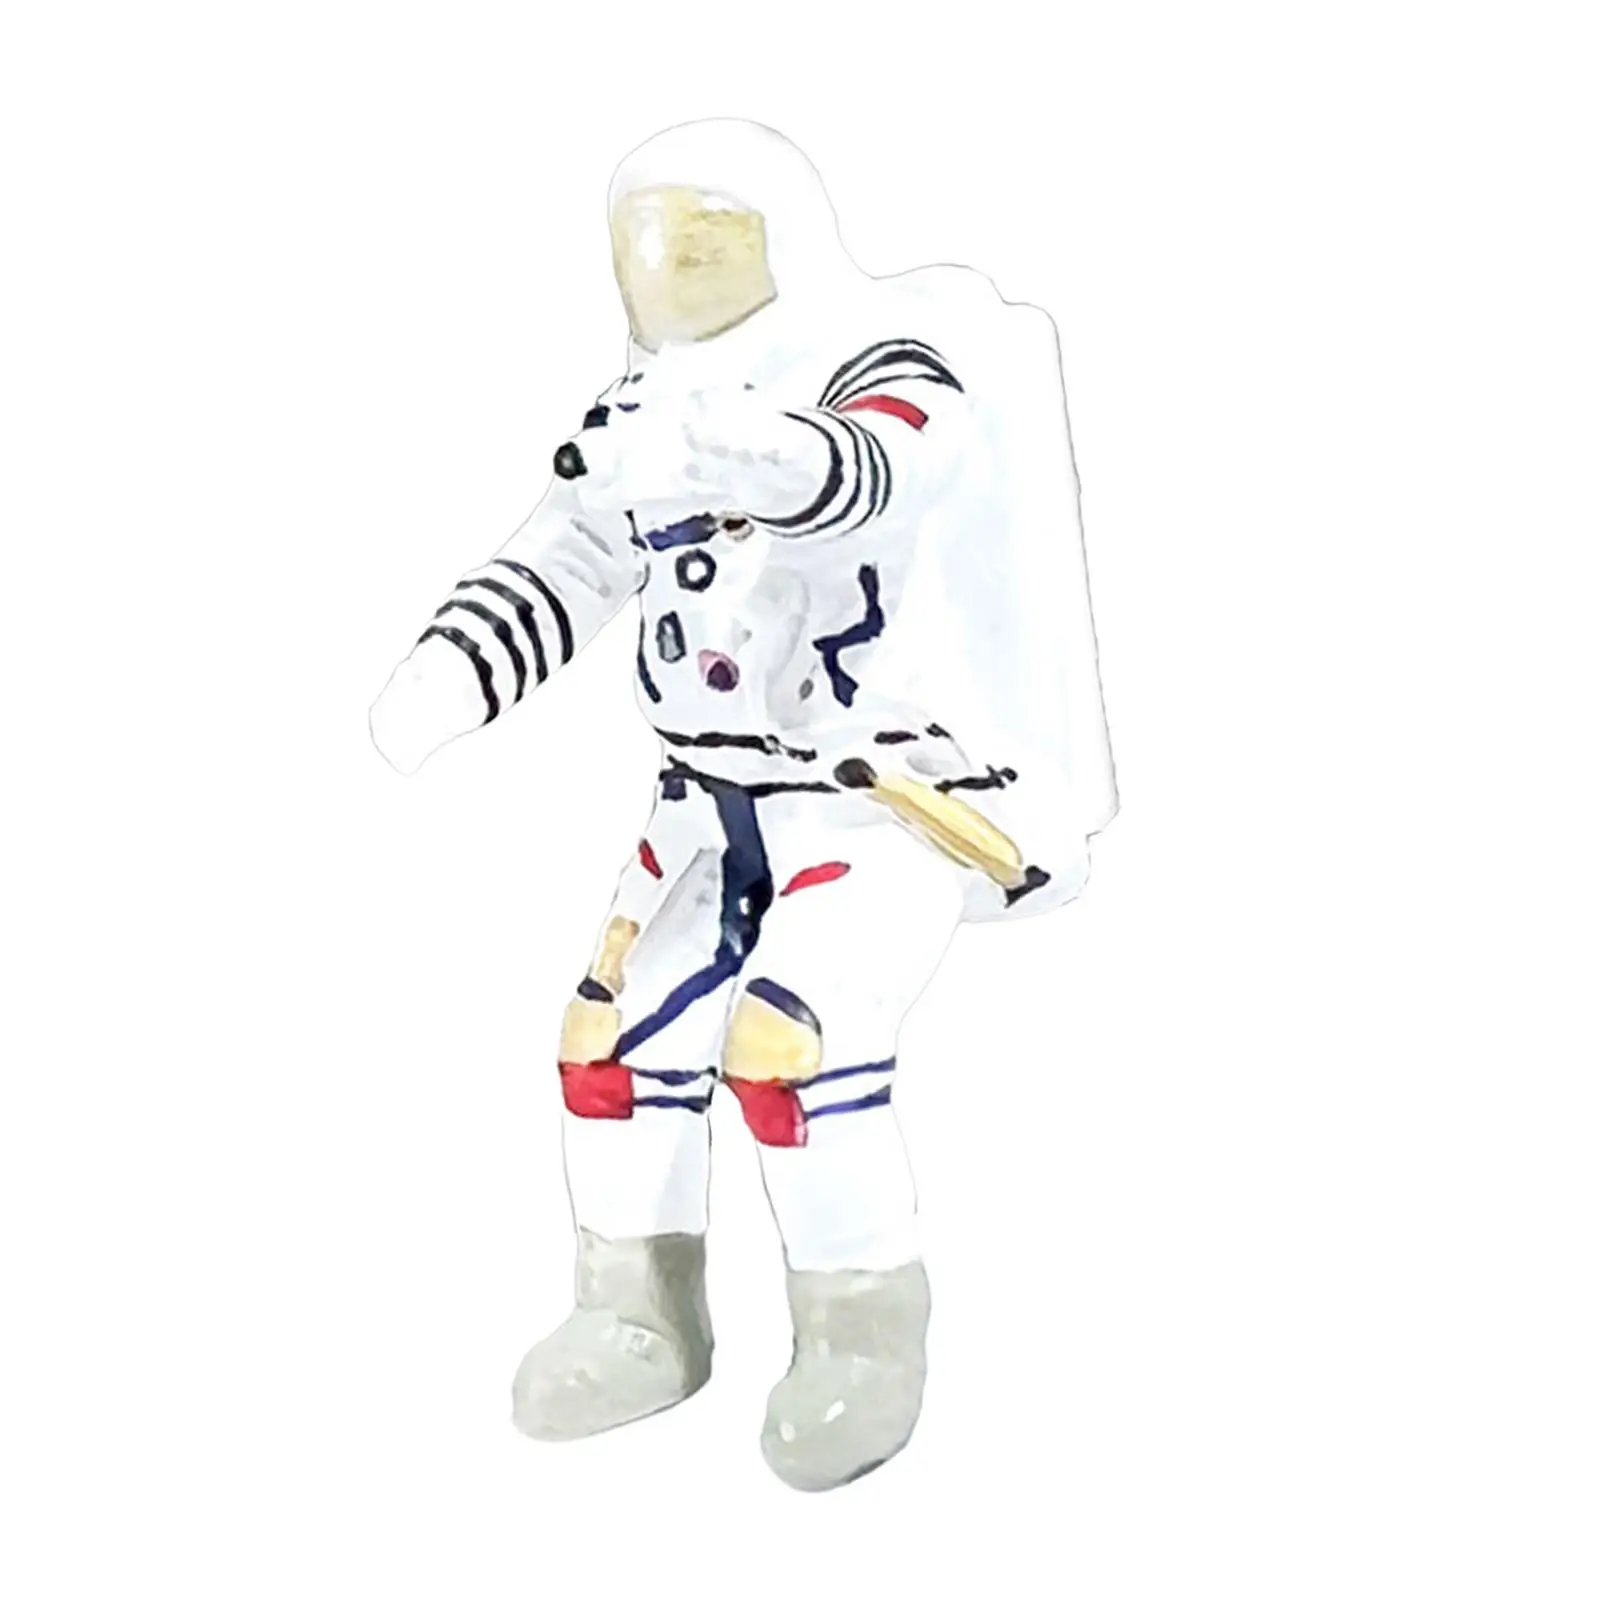 1/64 Scale Astronaut Figurines Spaceman Model for Miniature Scene Ornament